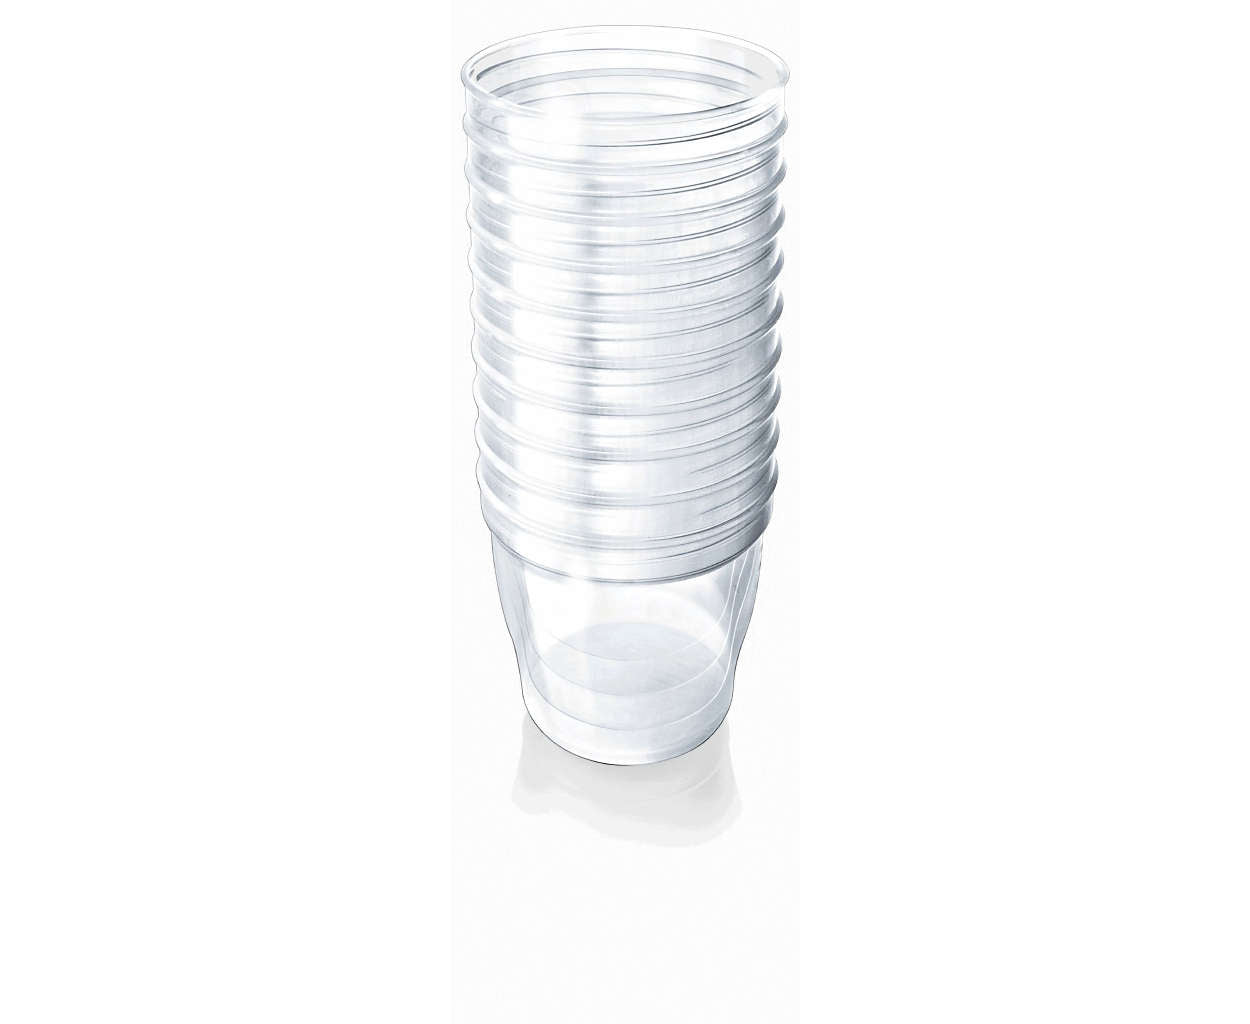 Philips Avent Via Breast Milk Storage Cups, 6 oz Refill, 10-Pack